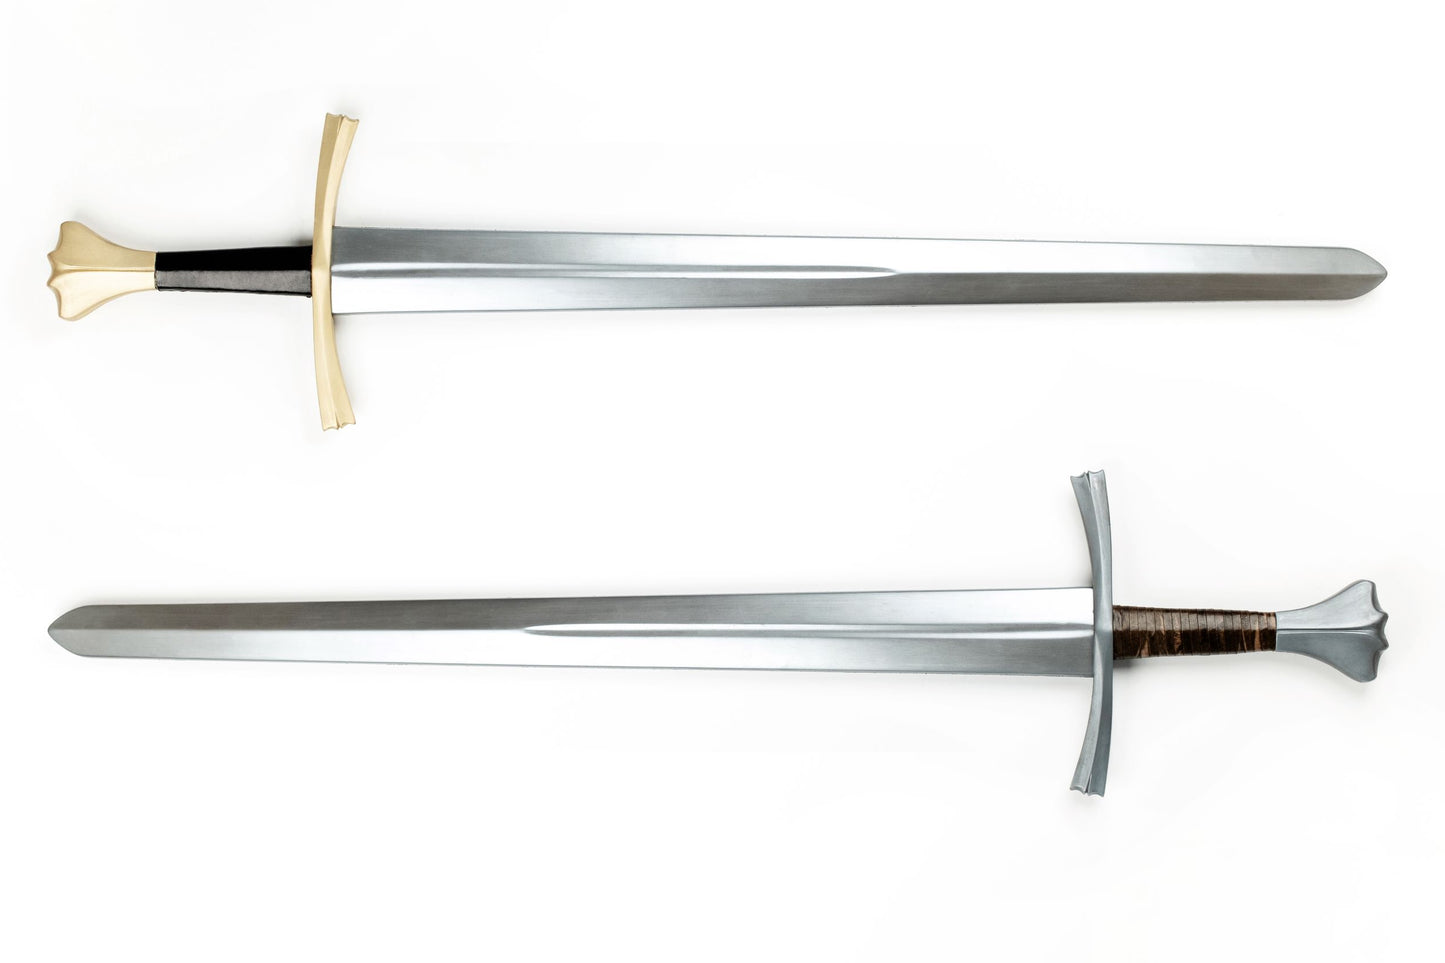 Fishtail - one-handed sword